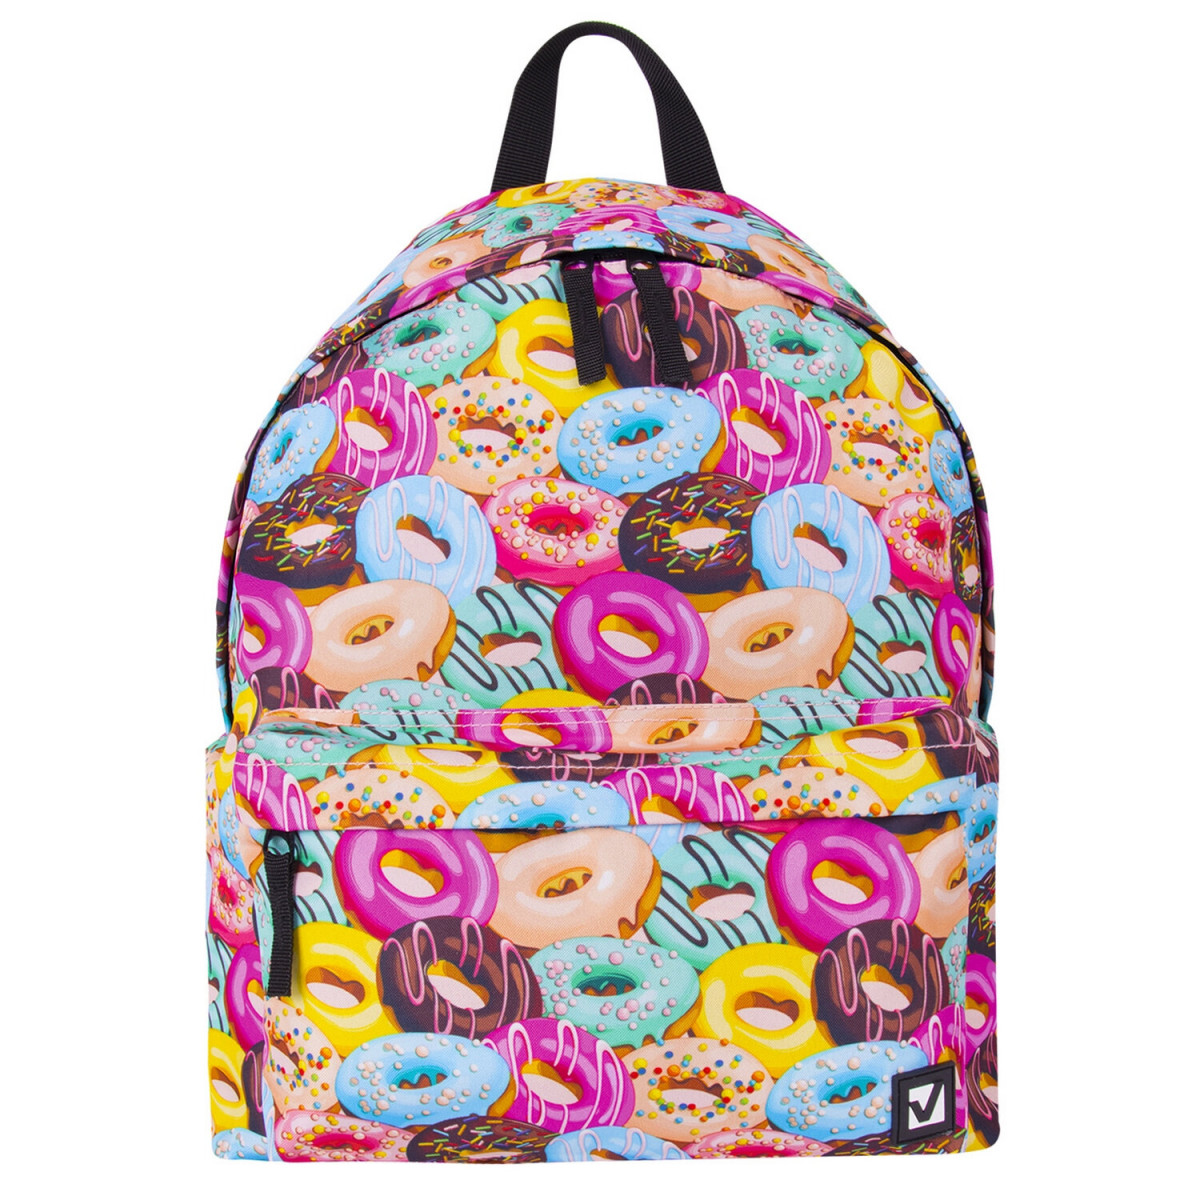 Рюкзак BRAUBERG, универсальный, сити-формат, Donuts, 20 литров, 41х32х14 см, 228862 (арт. 228862)